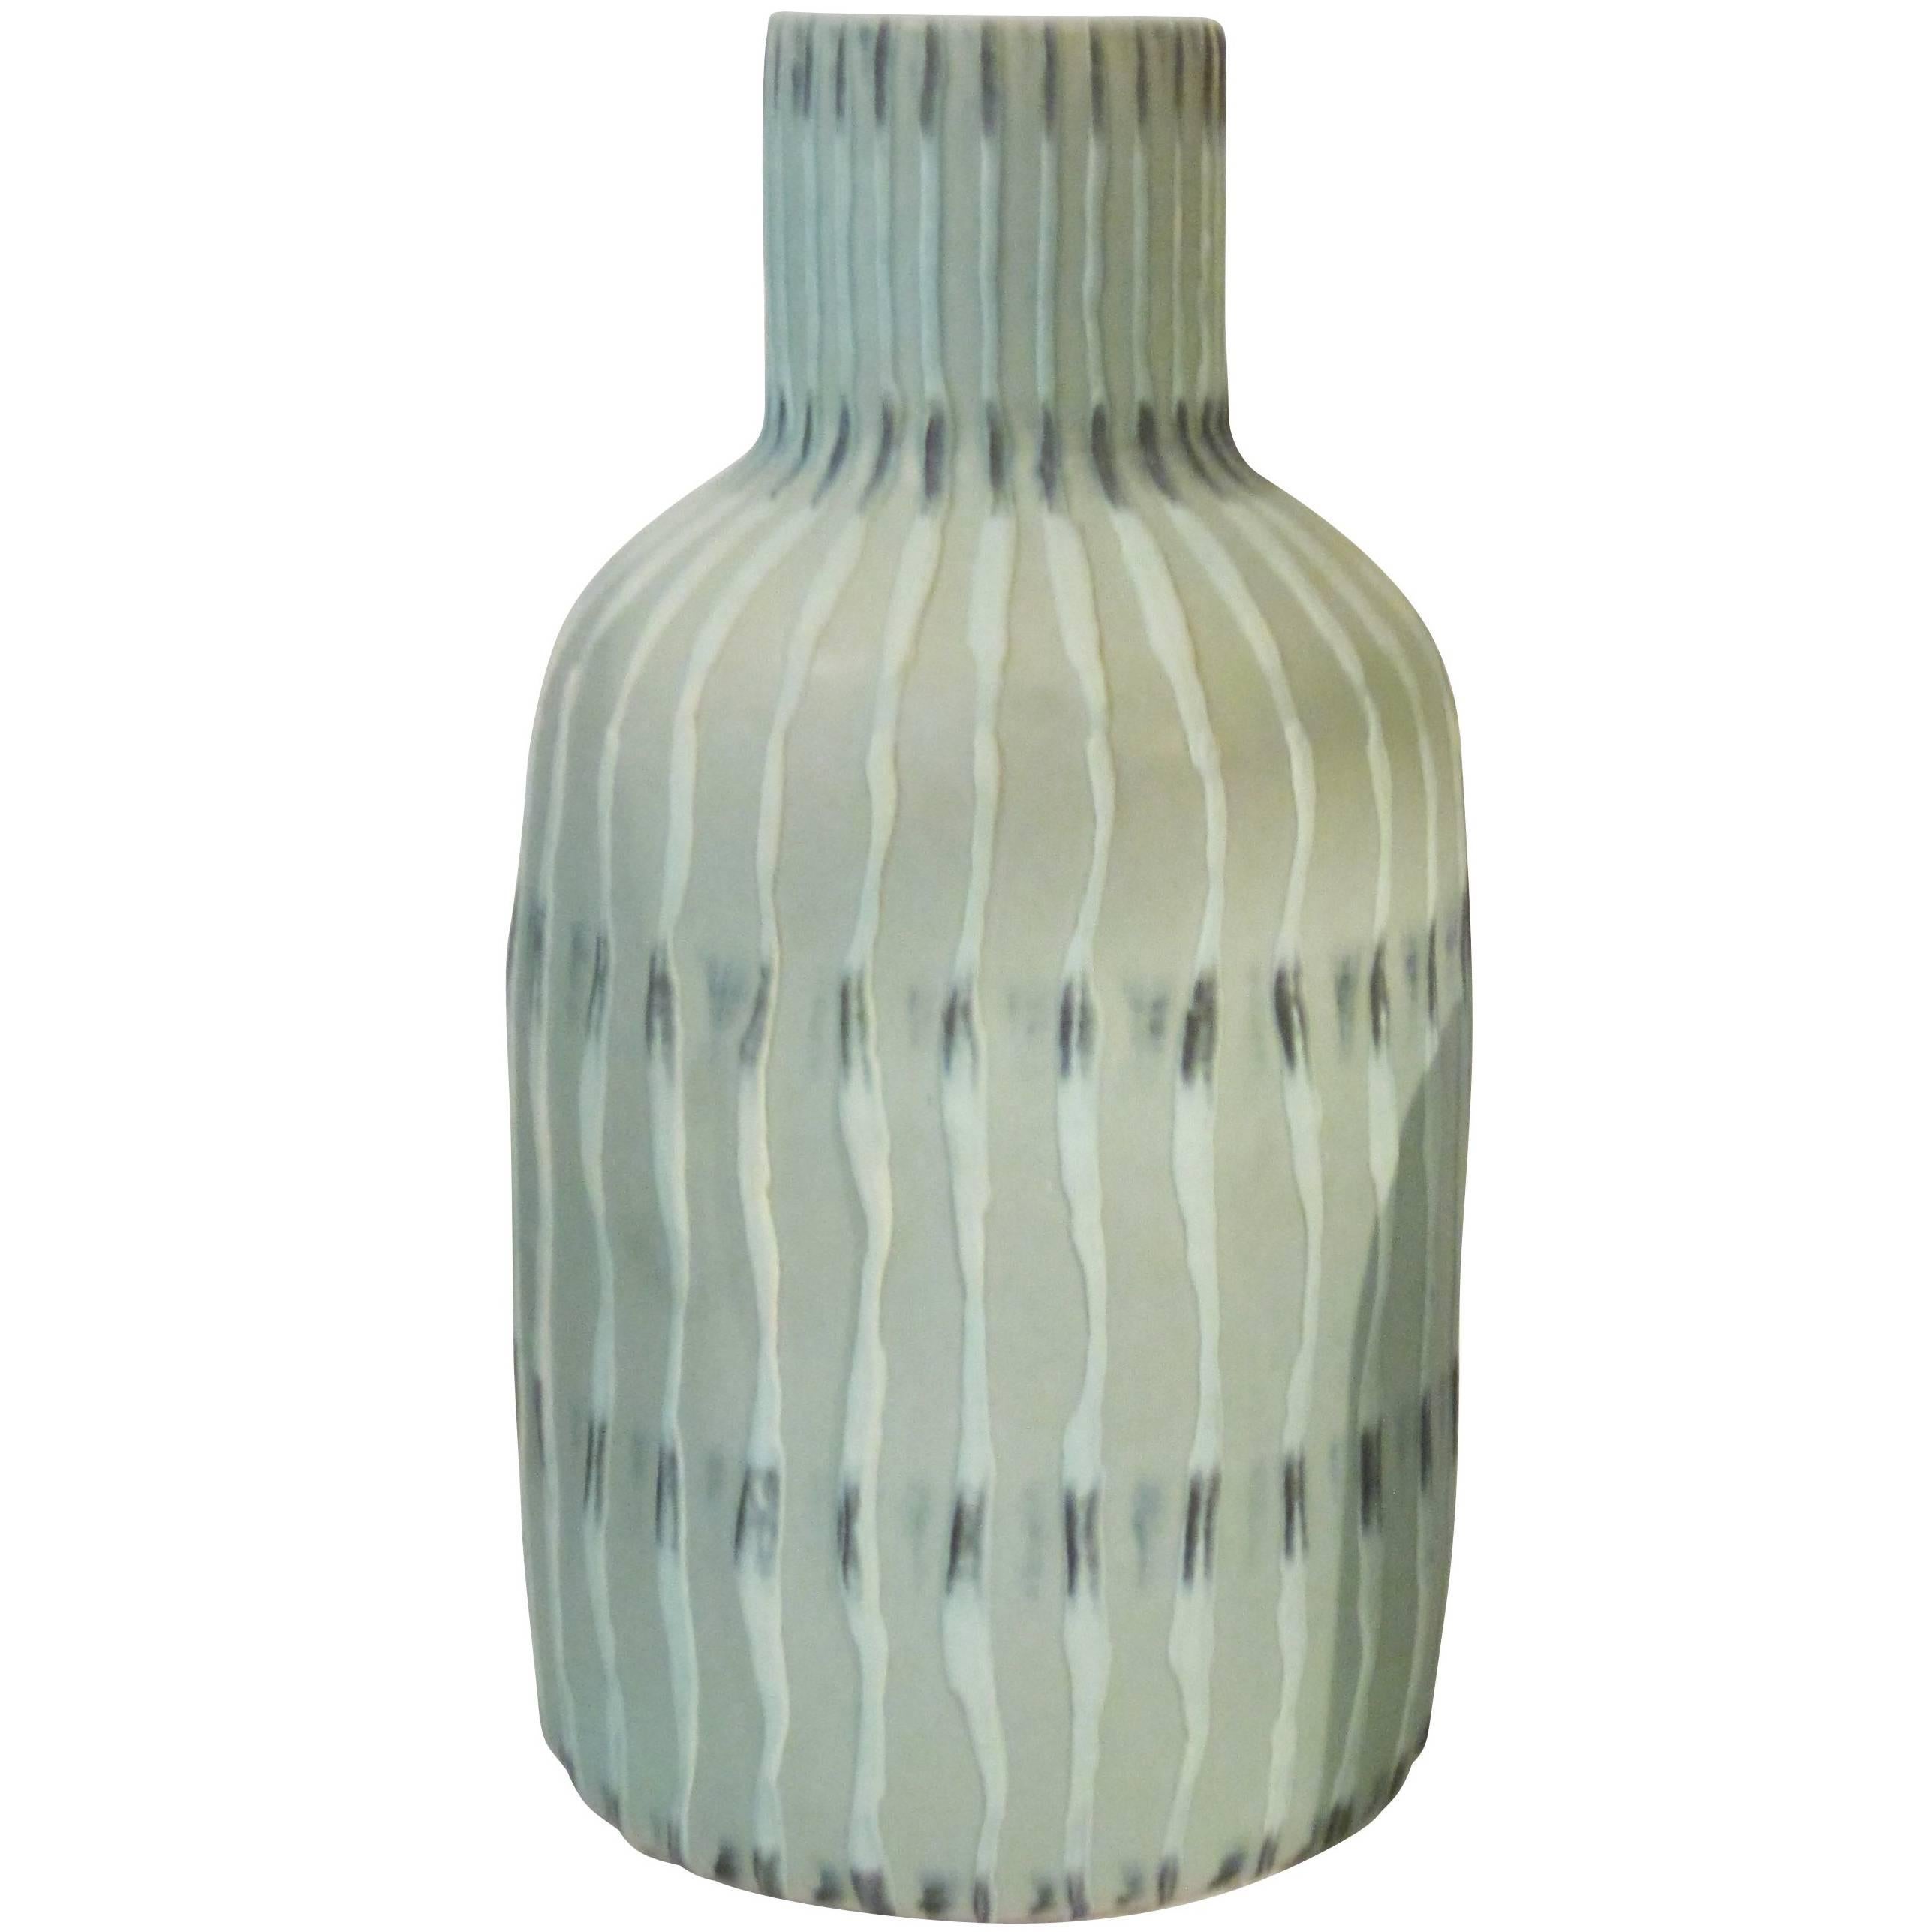 Textured Seafoam Stoneware Vase, Contemporary, Thailand